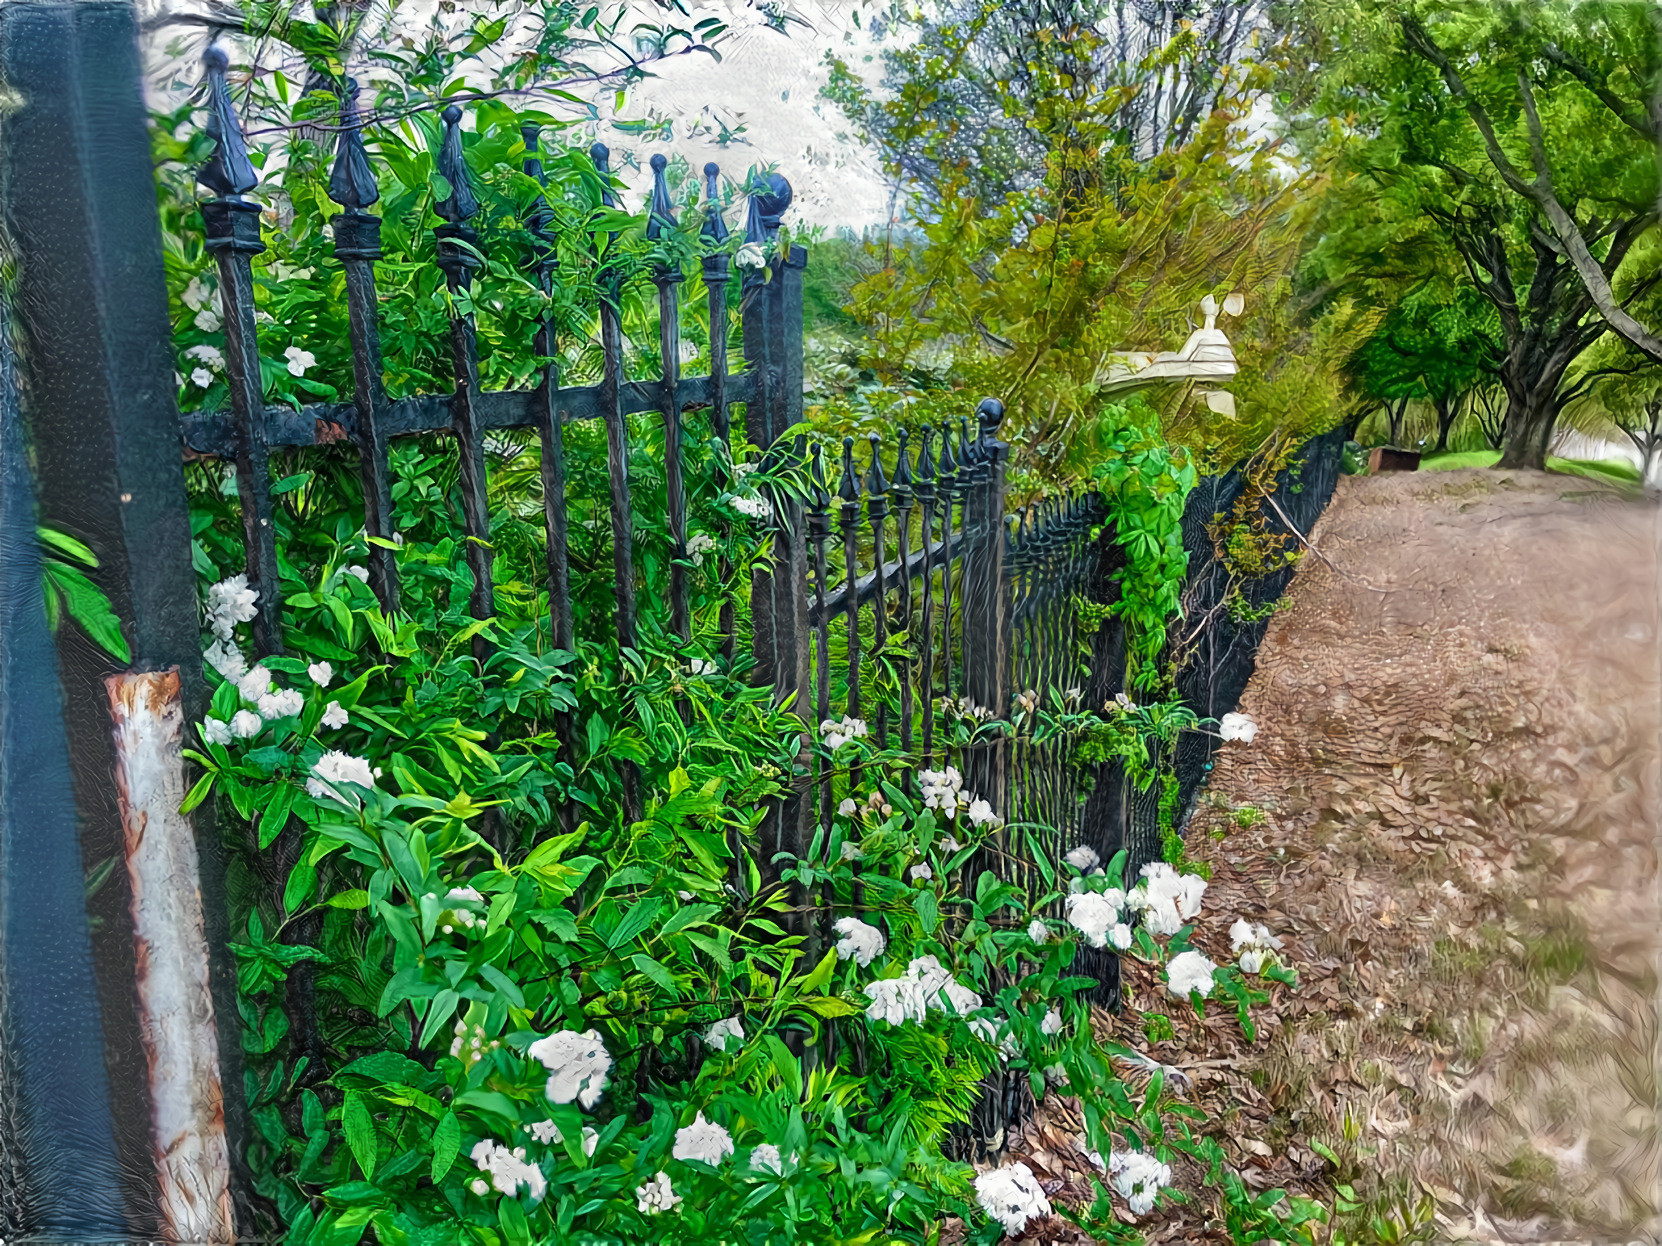 Idyllic fence in bloom